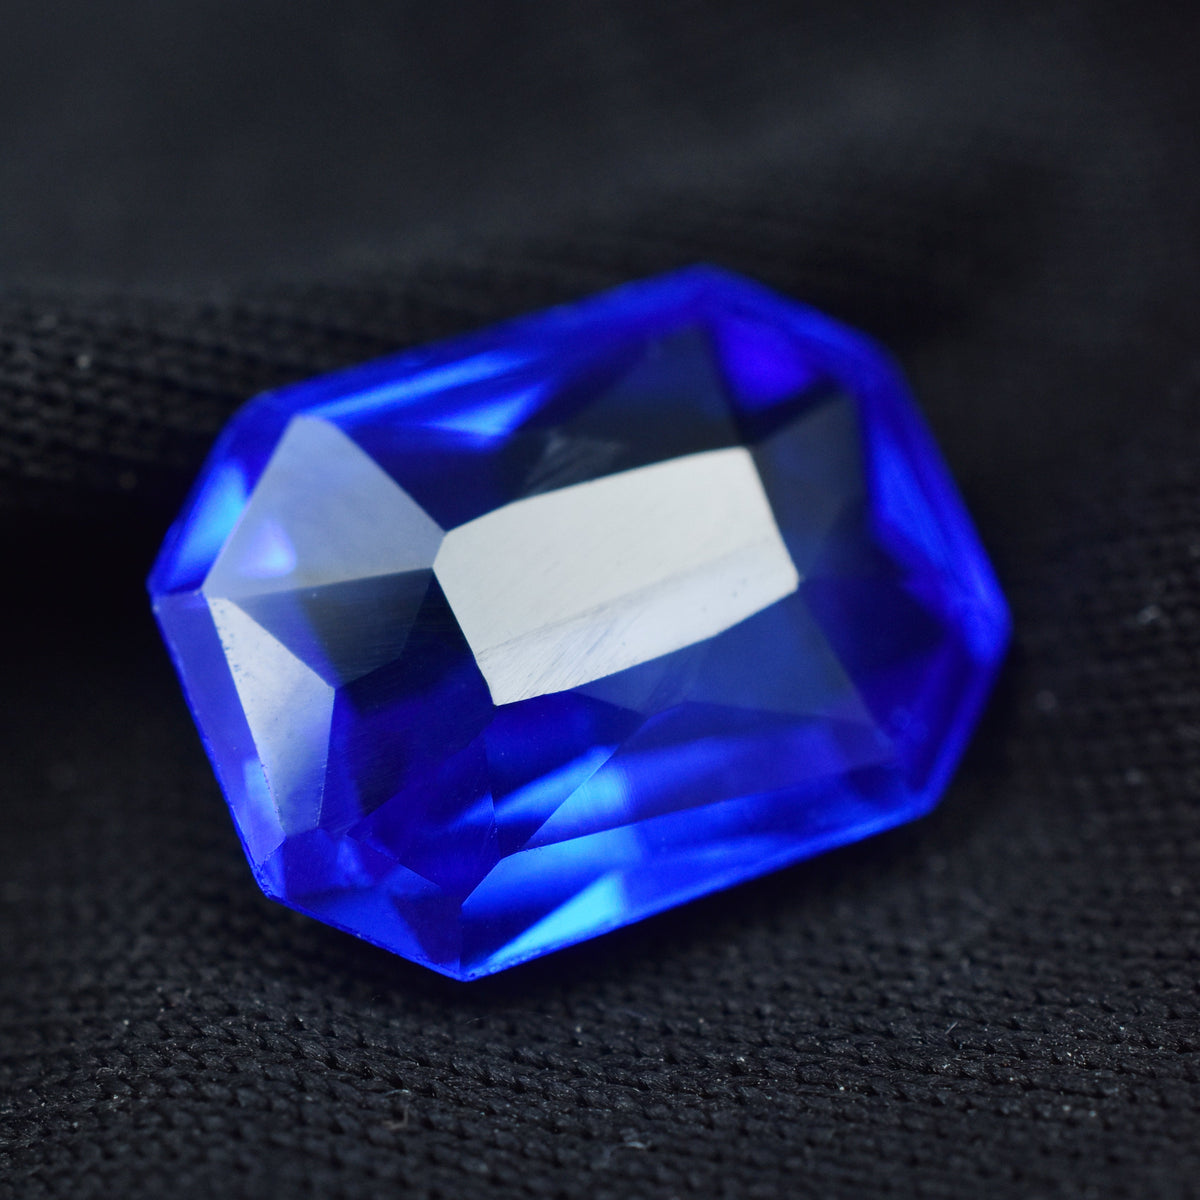 World's Best Blue Tanzanite Gem Only For You 5.30 Carat Blue Tanzanite Emerald Cut Certified Natural Loose Gemstone Jewelry Making Tanzania Gemstone